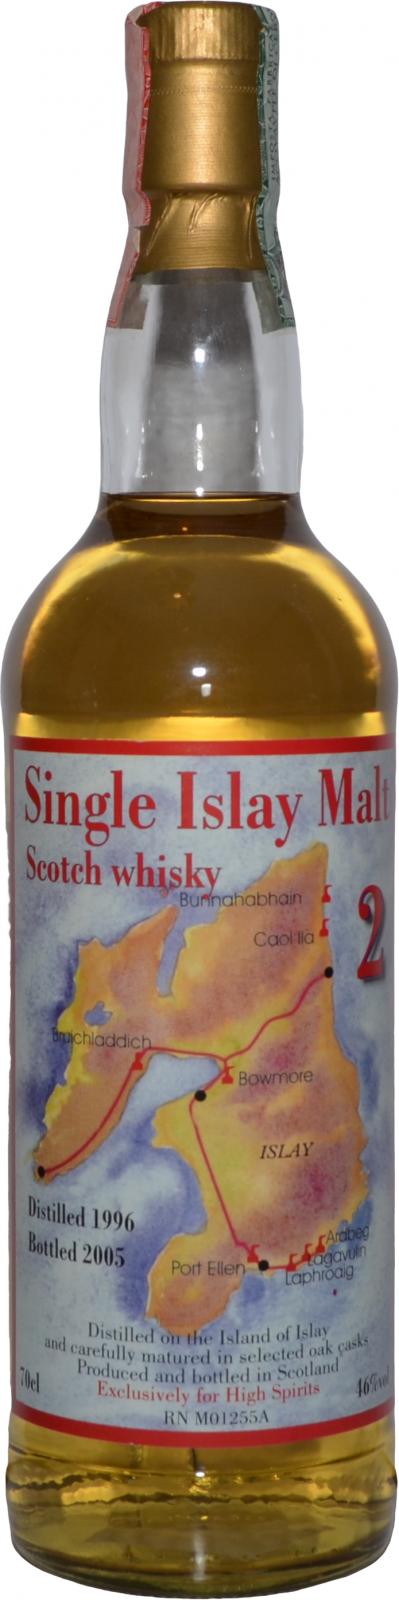 Single Islay Malt Scotch Whisky 1996 HSC for High Spirits 46% 700ml